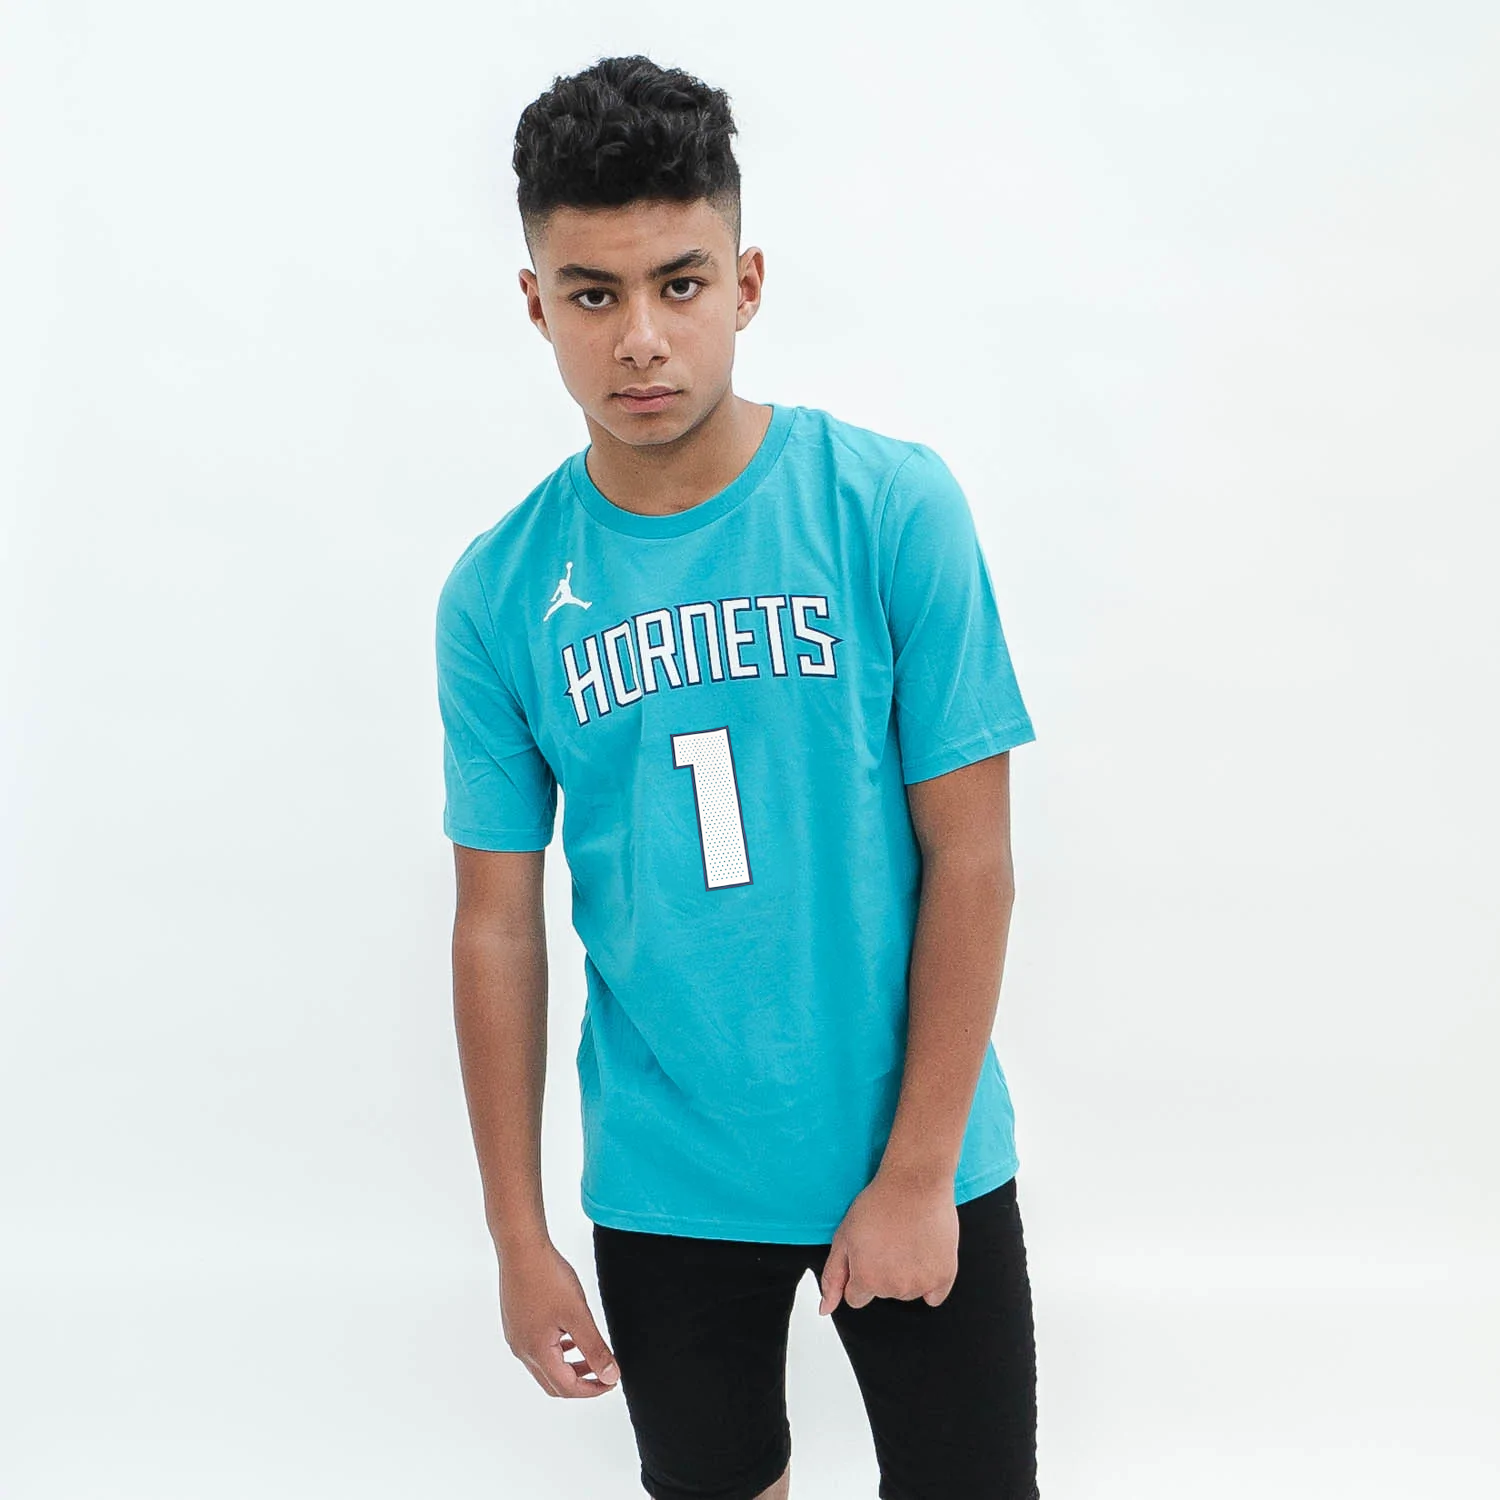 Brooklyn Nets City Slogan Youth NBA T-Shirt/Unisex Tee/3XL